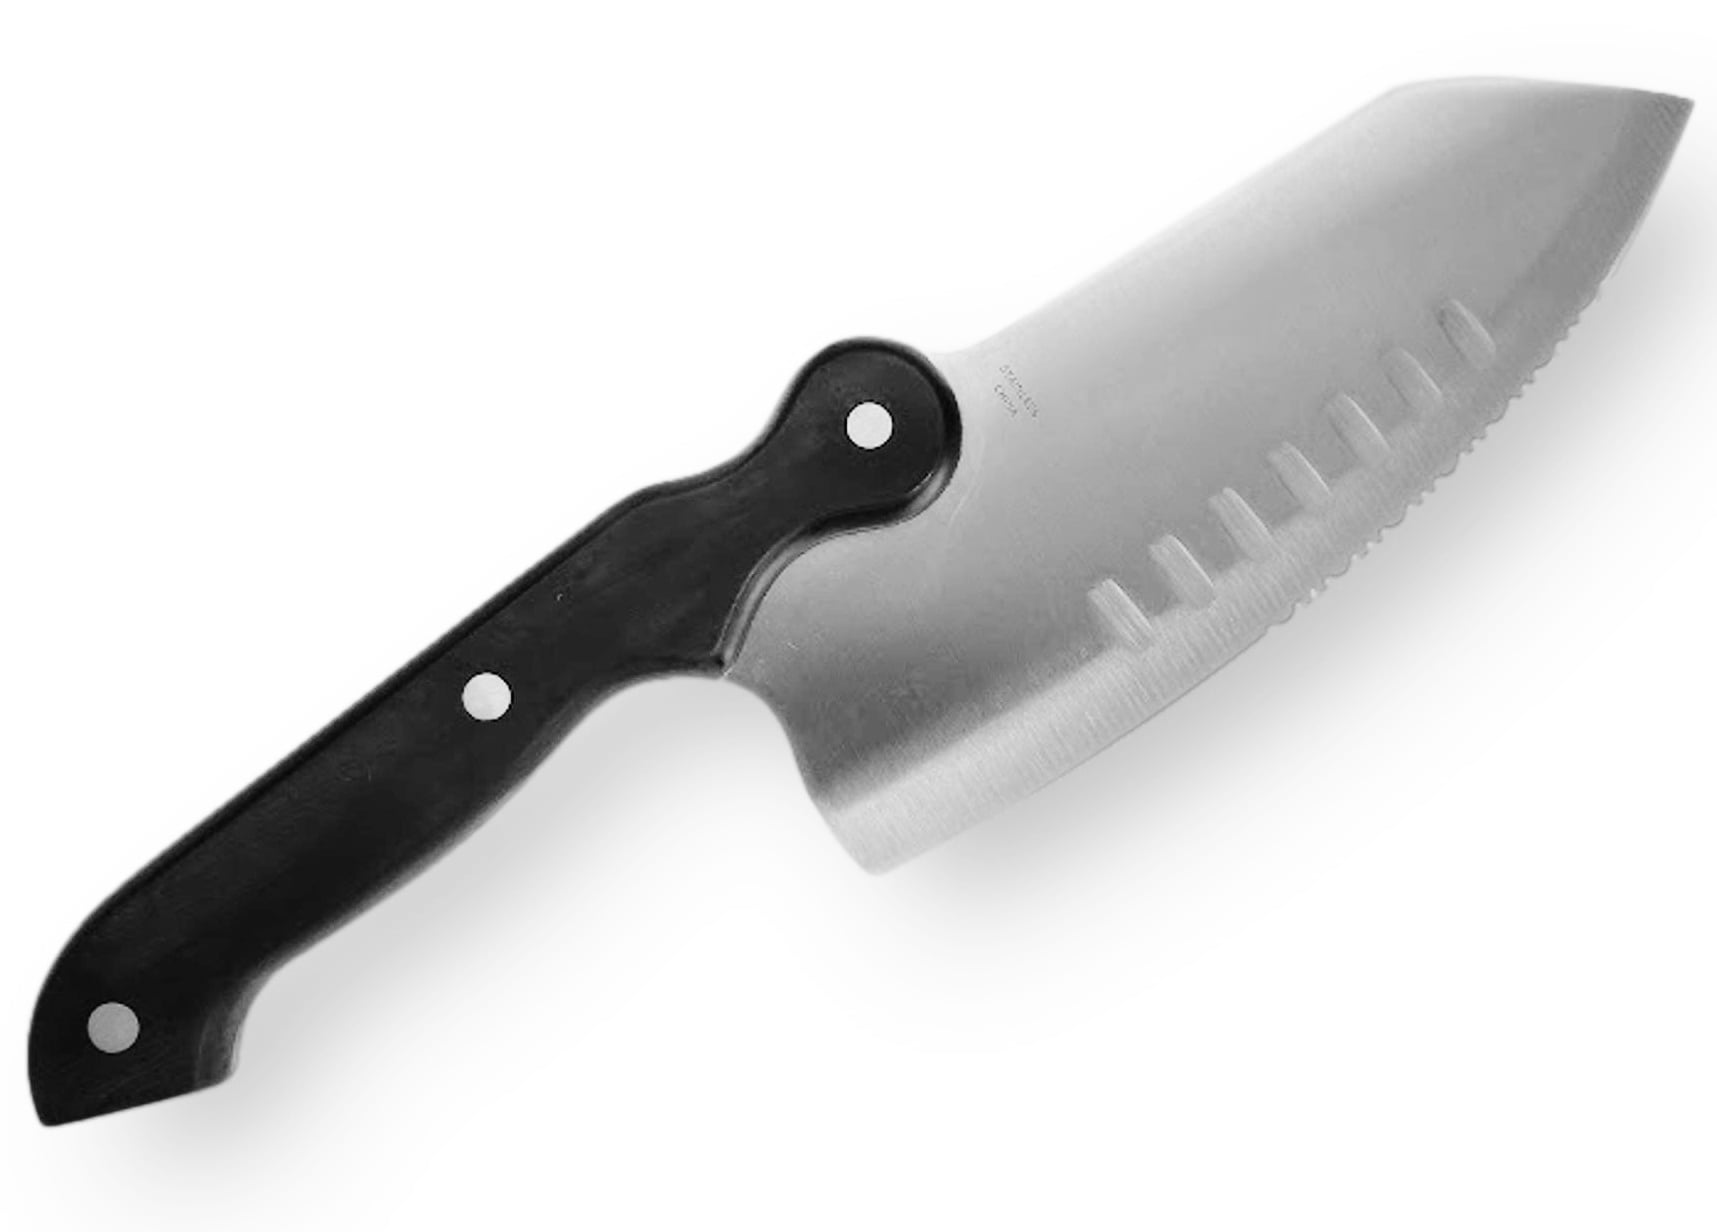 N. 9616 Convivio Nuovo 23 Cm. Steak Knife